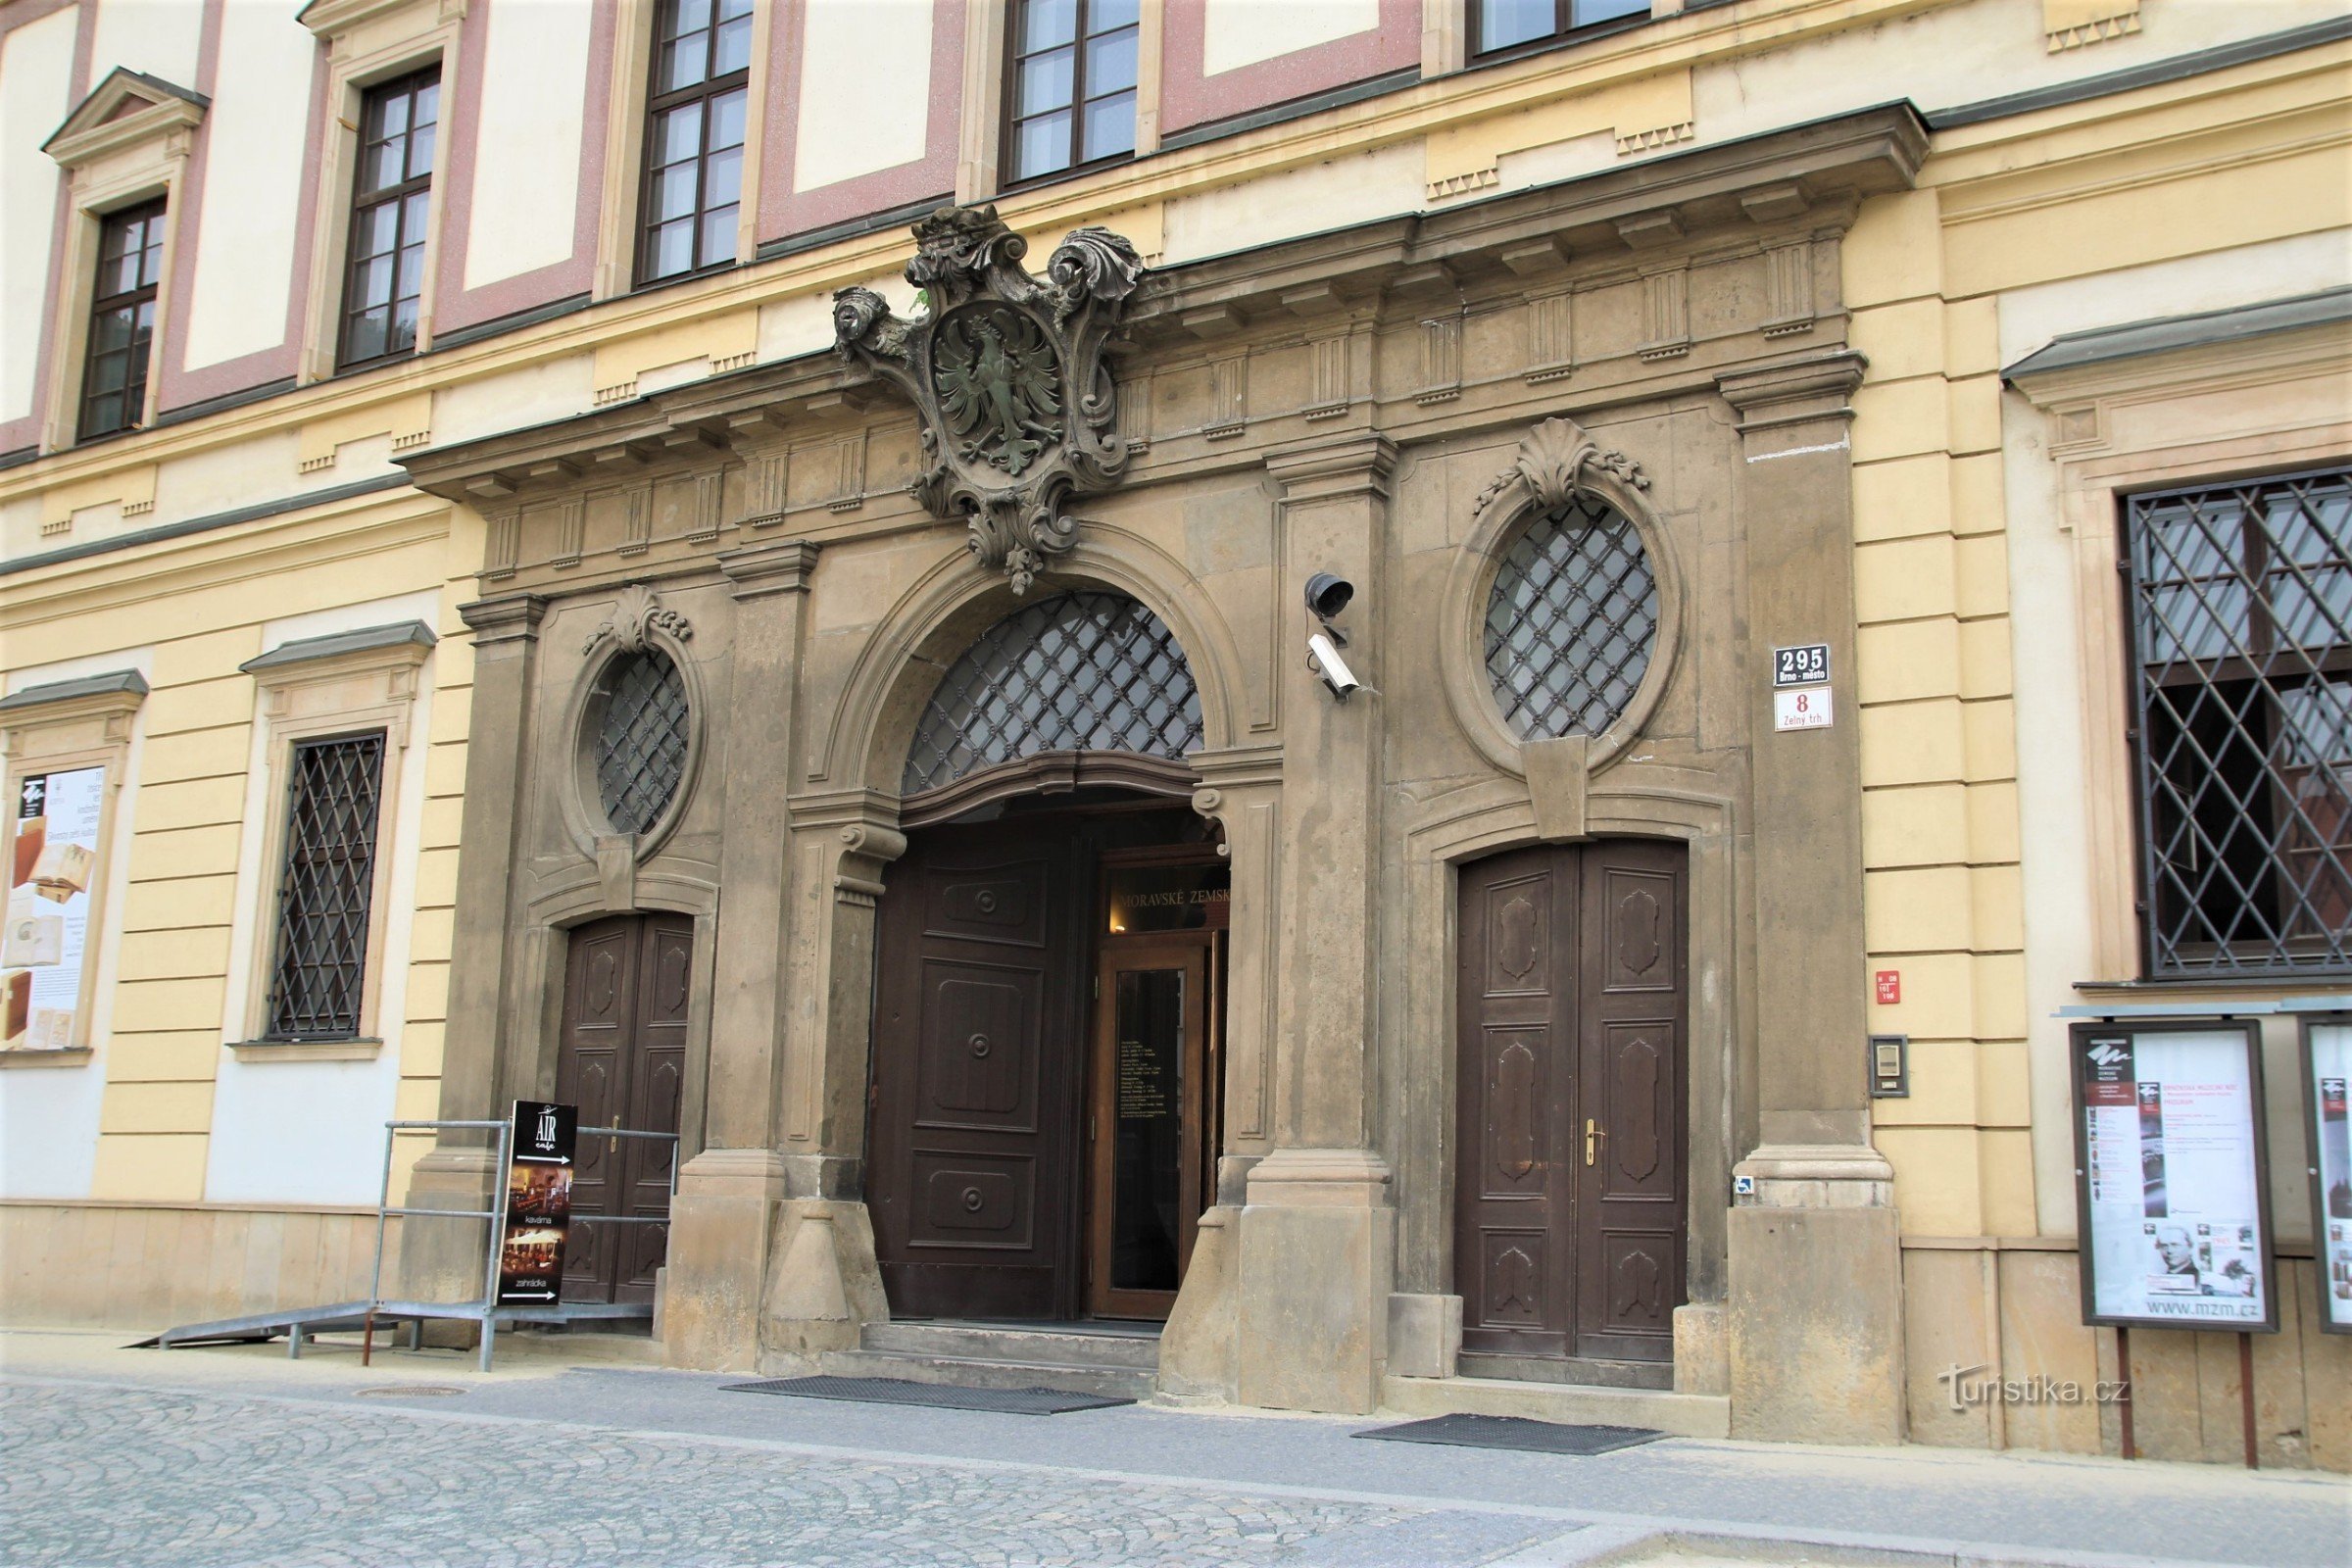 Entrance portal of the palace